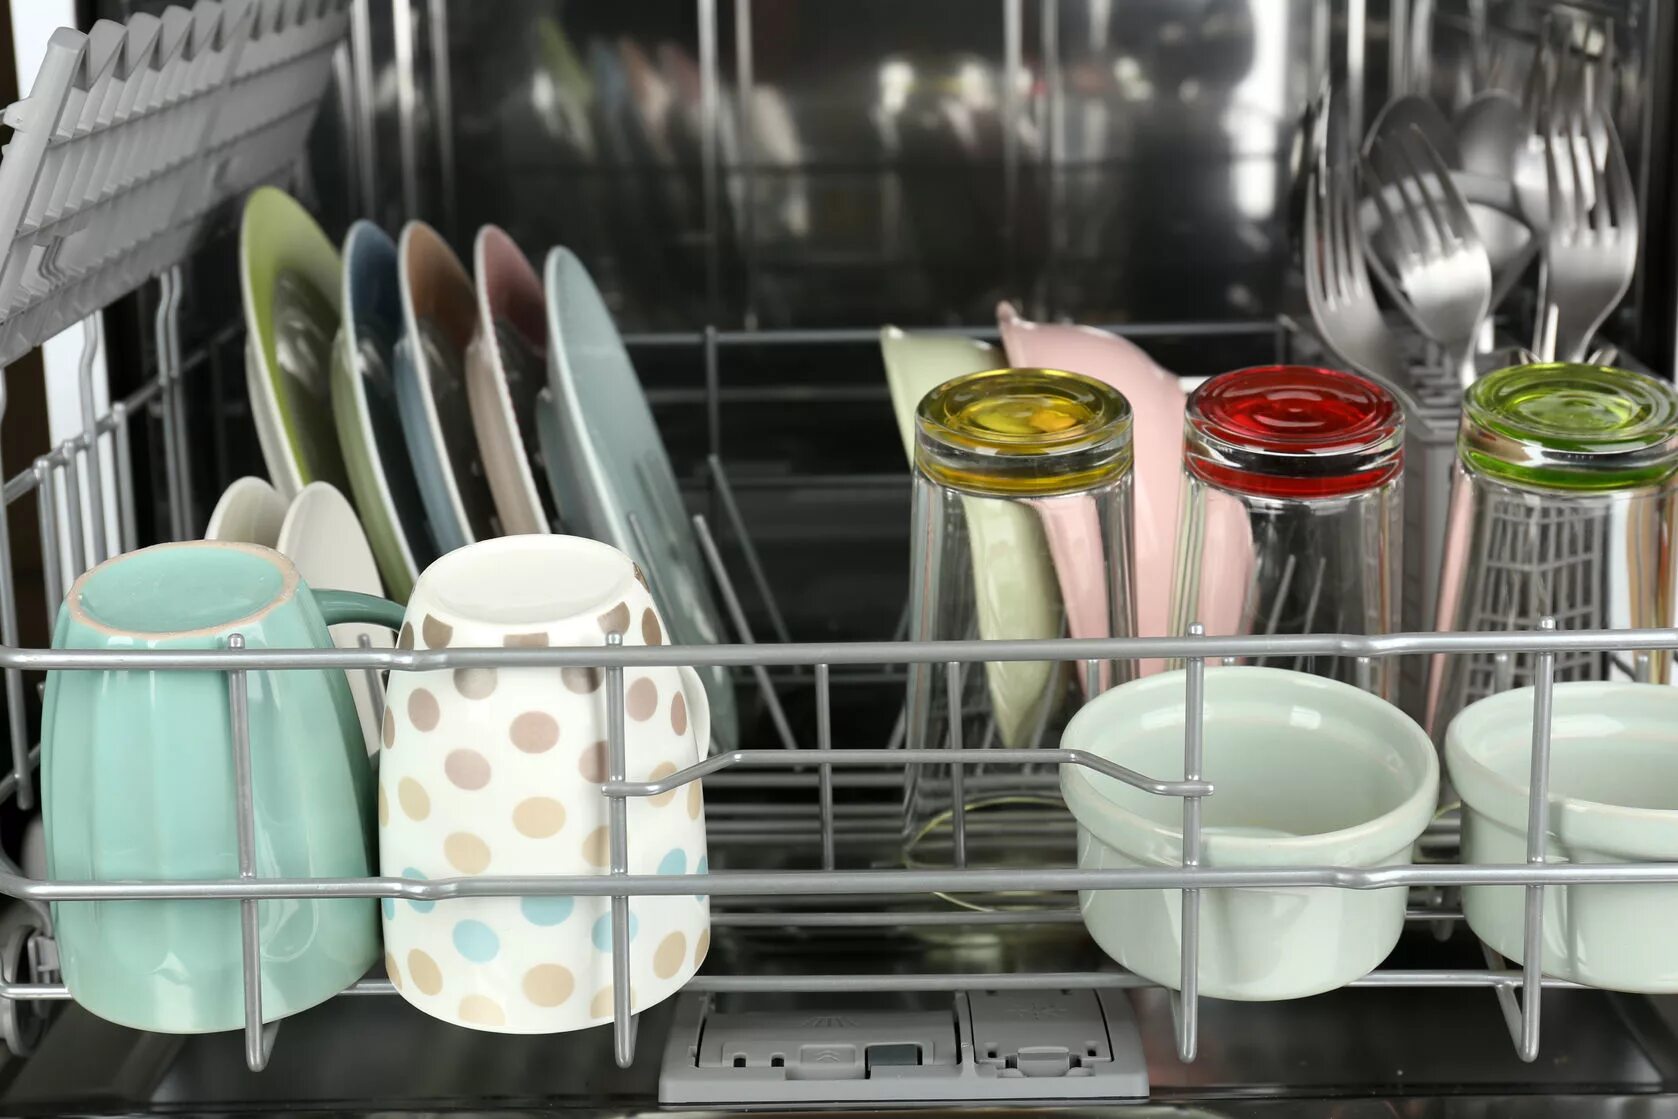 Брать посуду можно. Посуда. Чистая посуда на кухне. Мытье посуды. Мытая посуда.